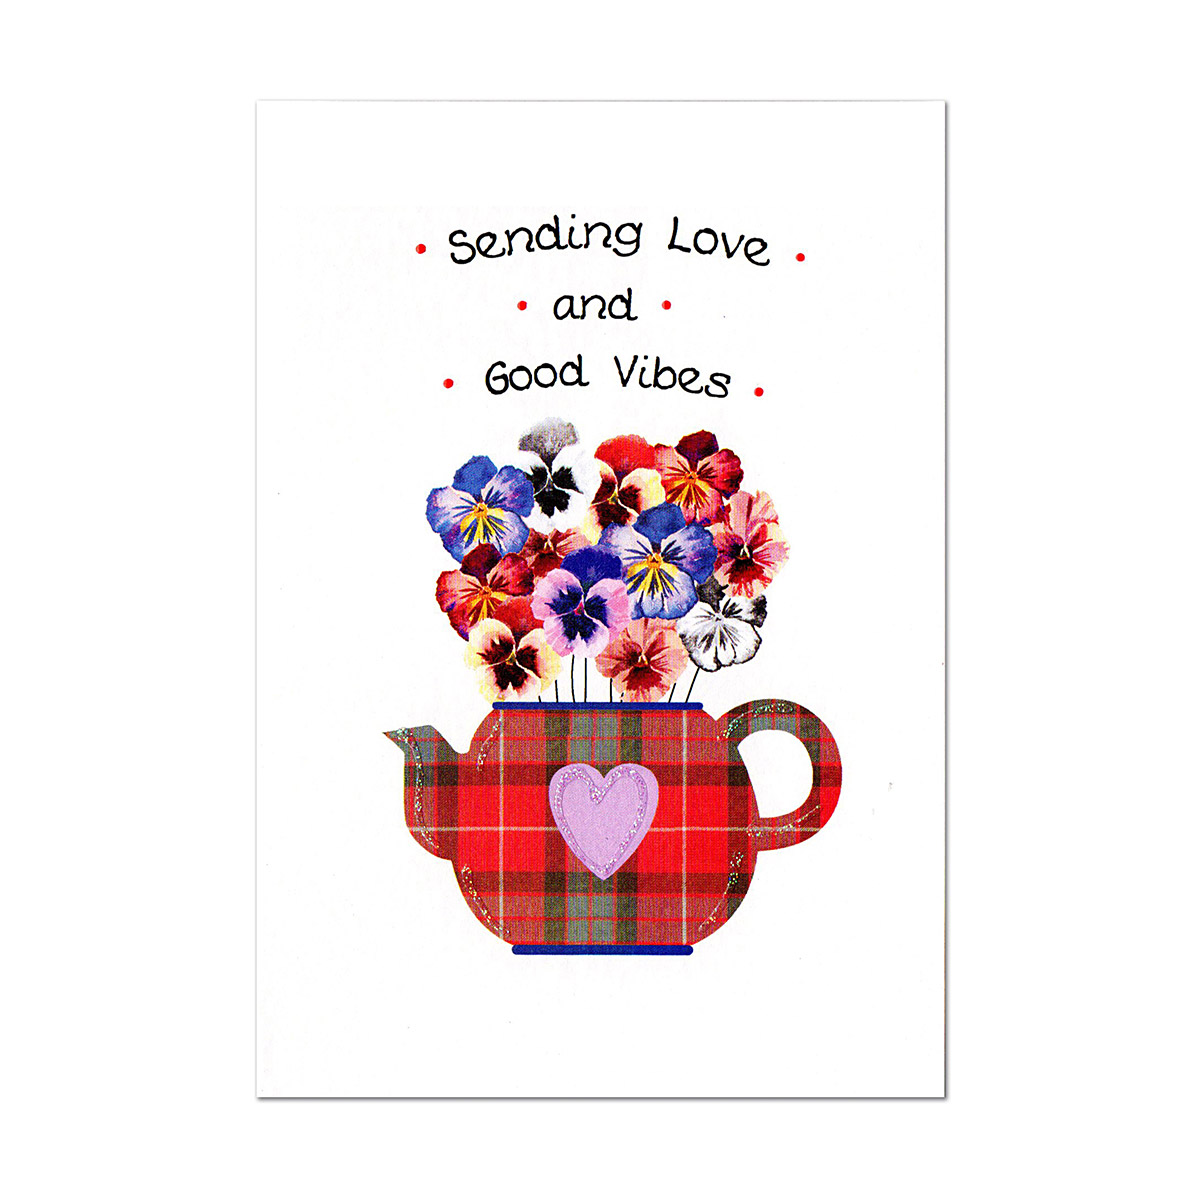 Sending Love and Good Vibes - Grußkarte aus Schottland